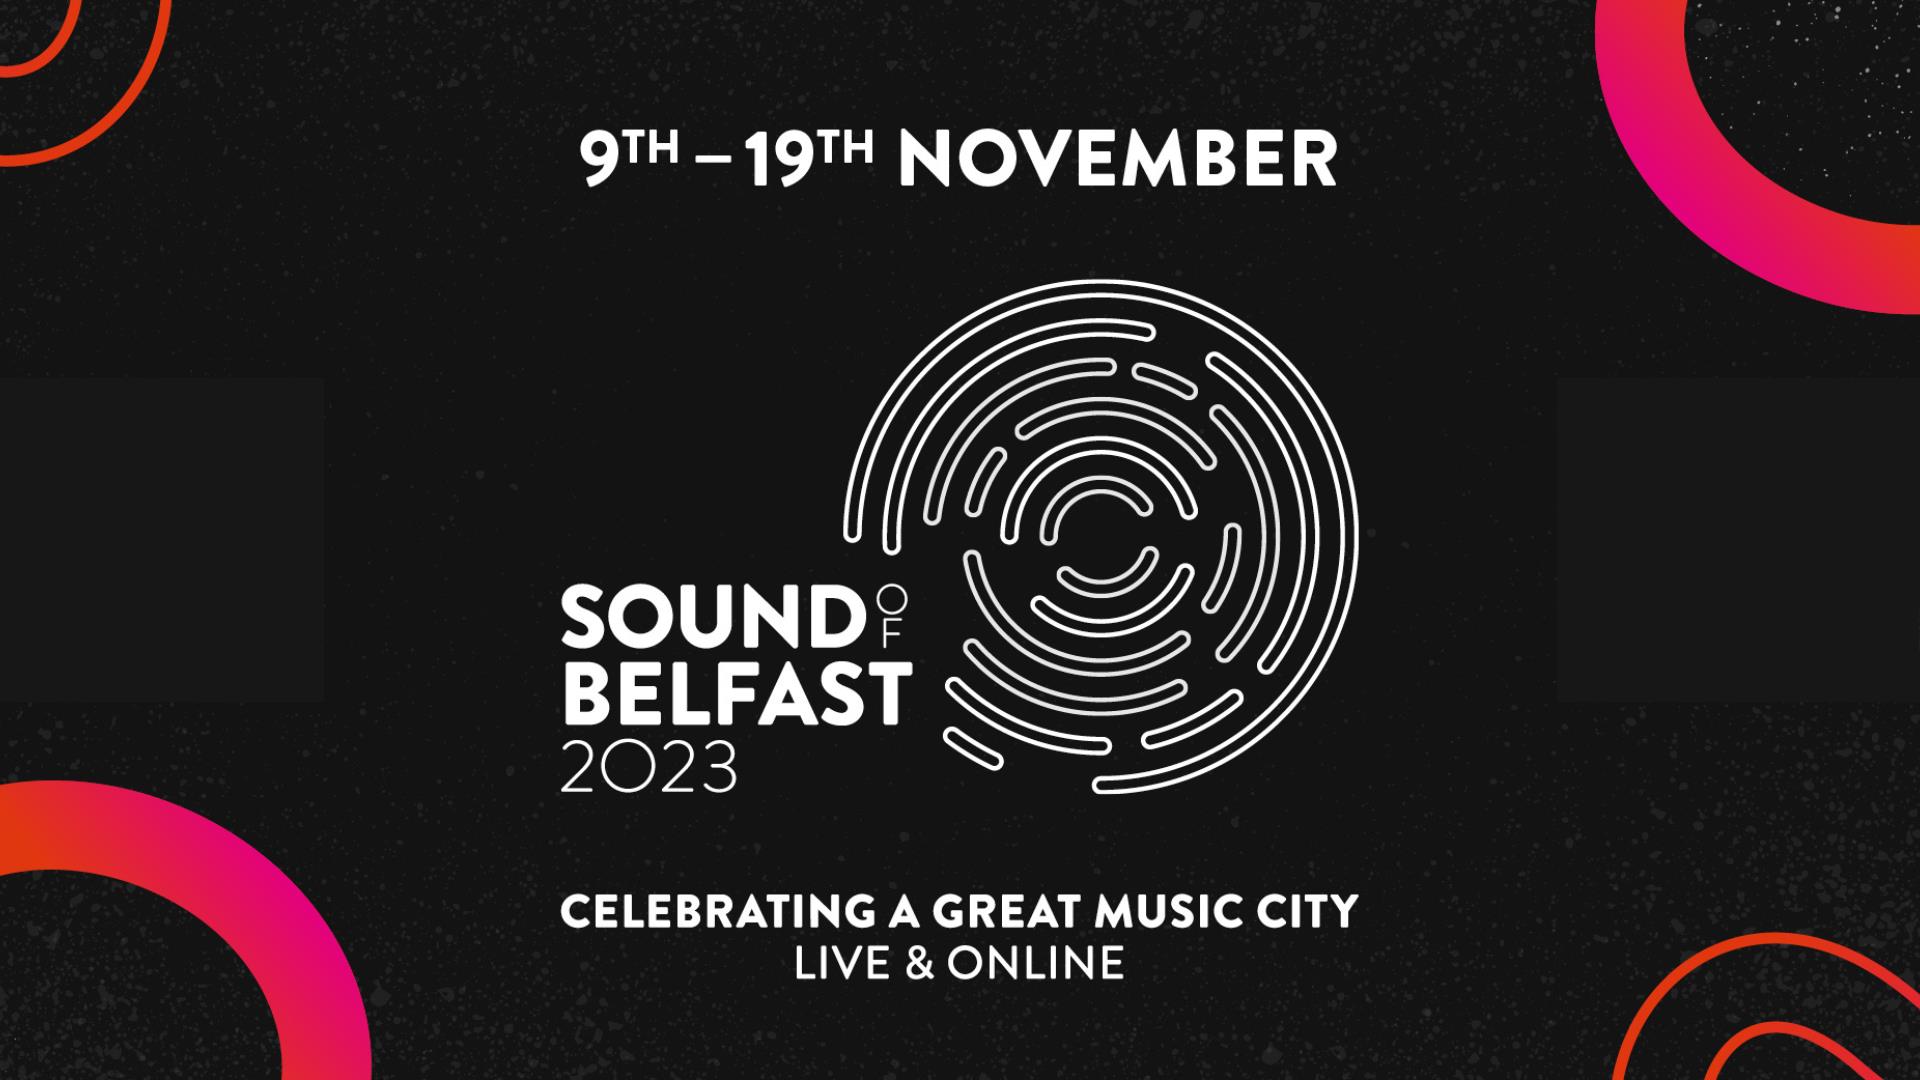 Sound of Belfast